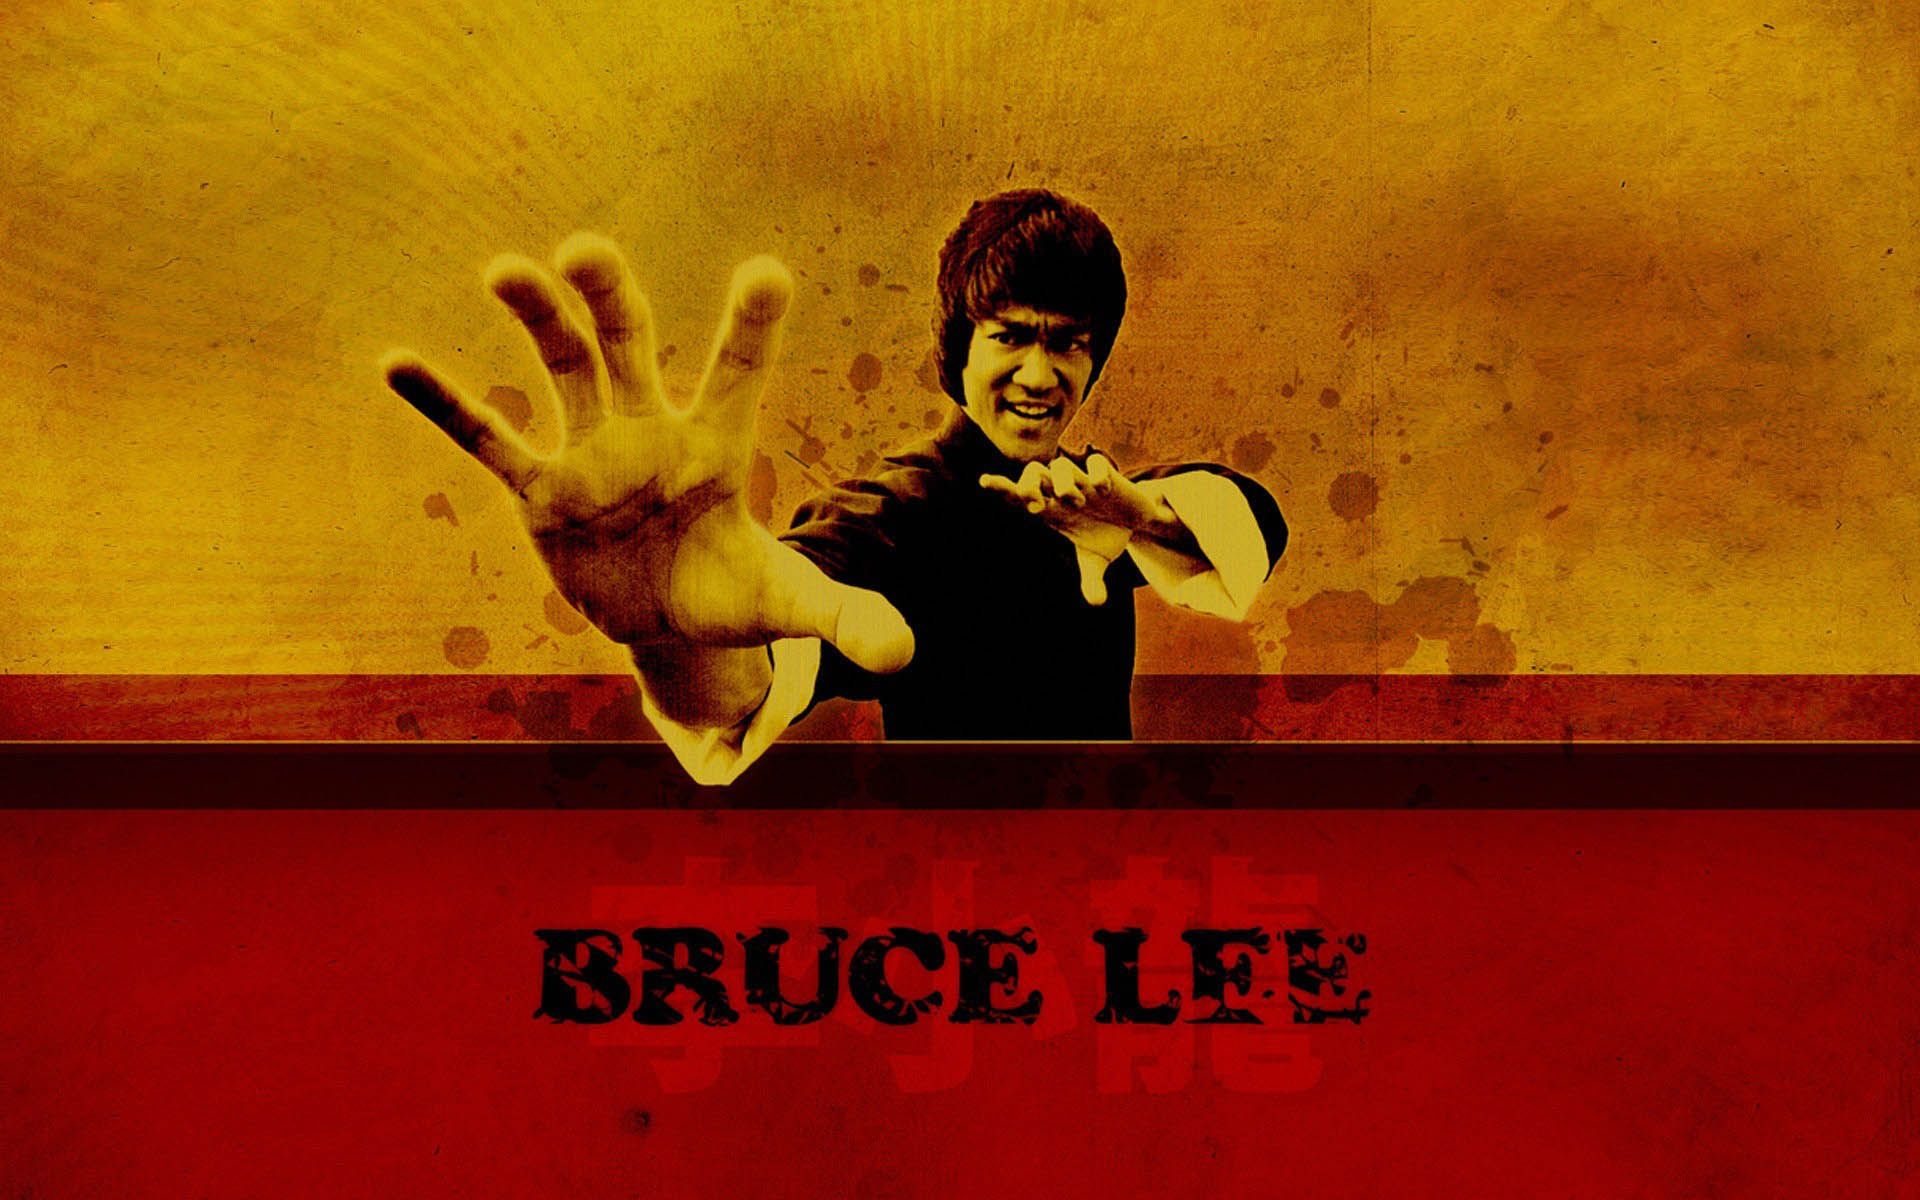 Bruce Lee wallpaper 1920x1200 Wallpapers, 1920x1200 Wallpapers ...